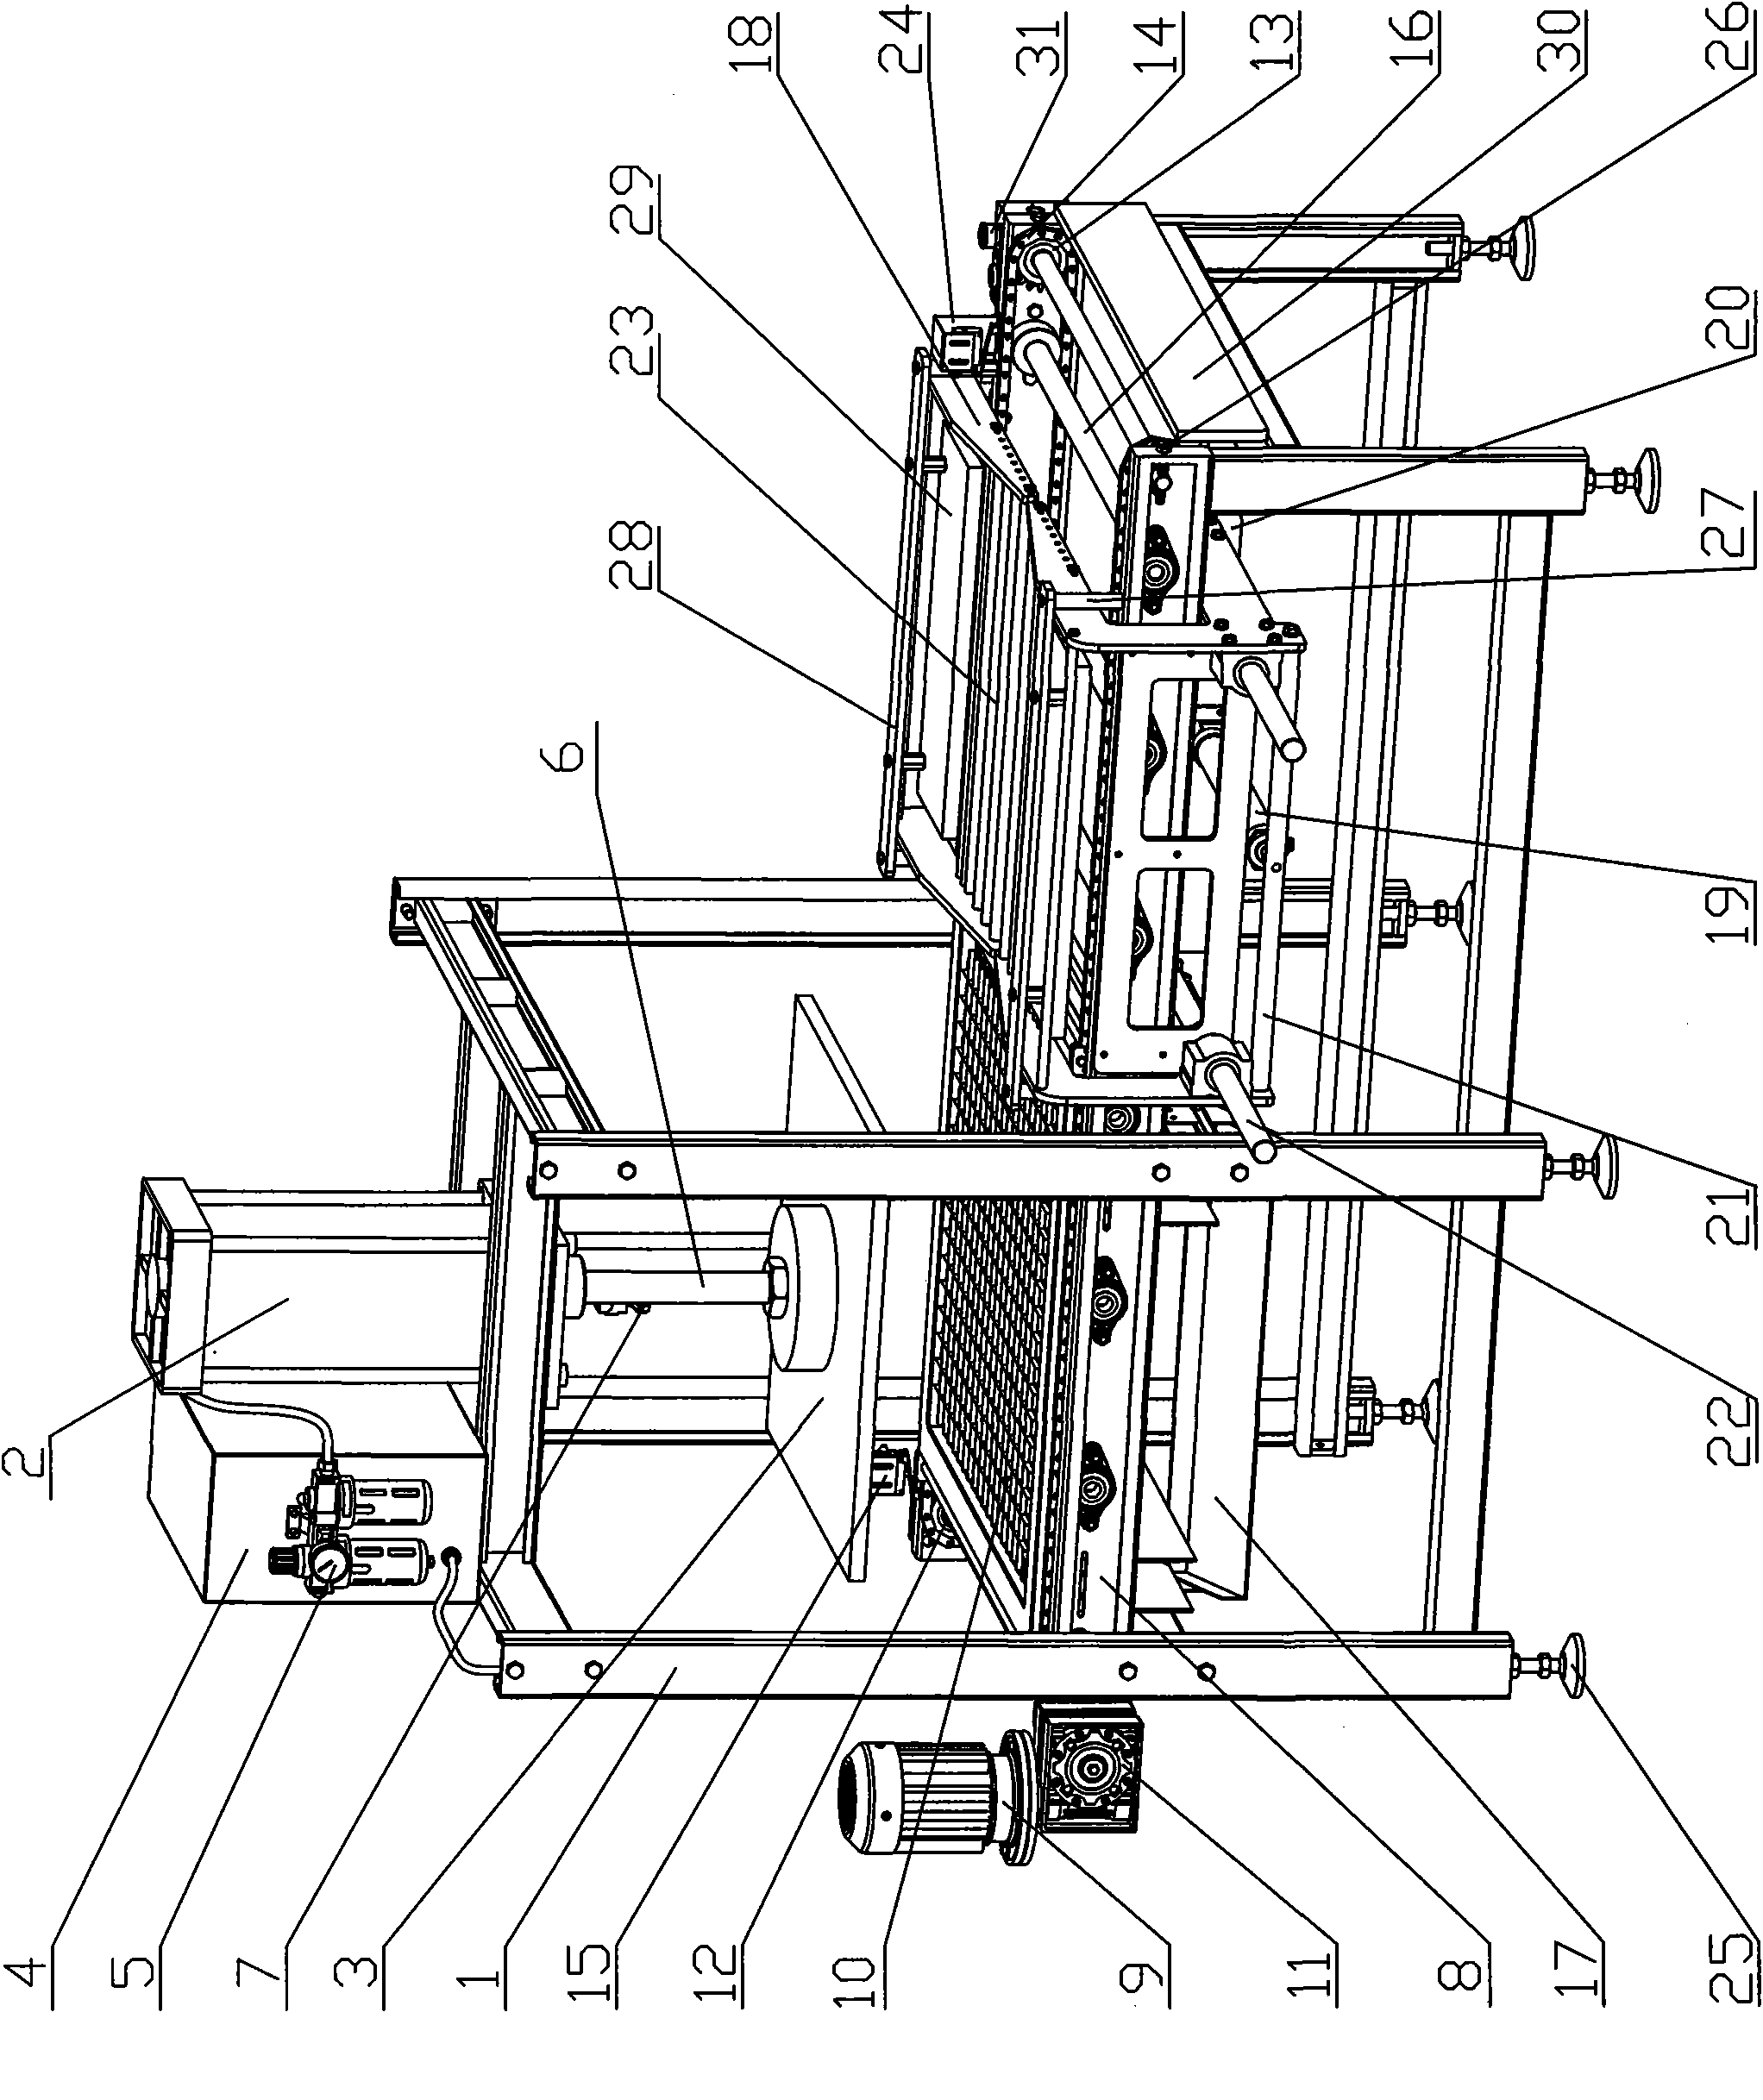 Automatic slicing machine